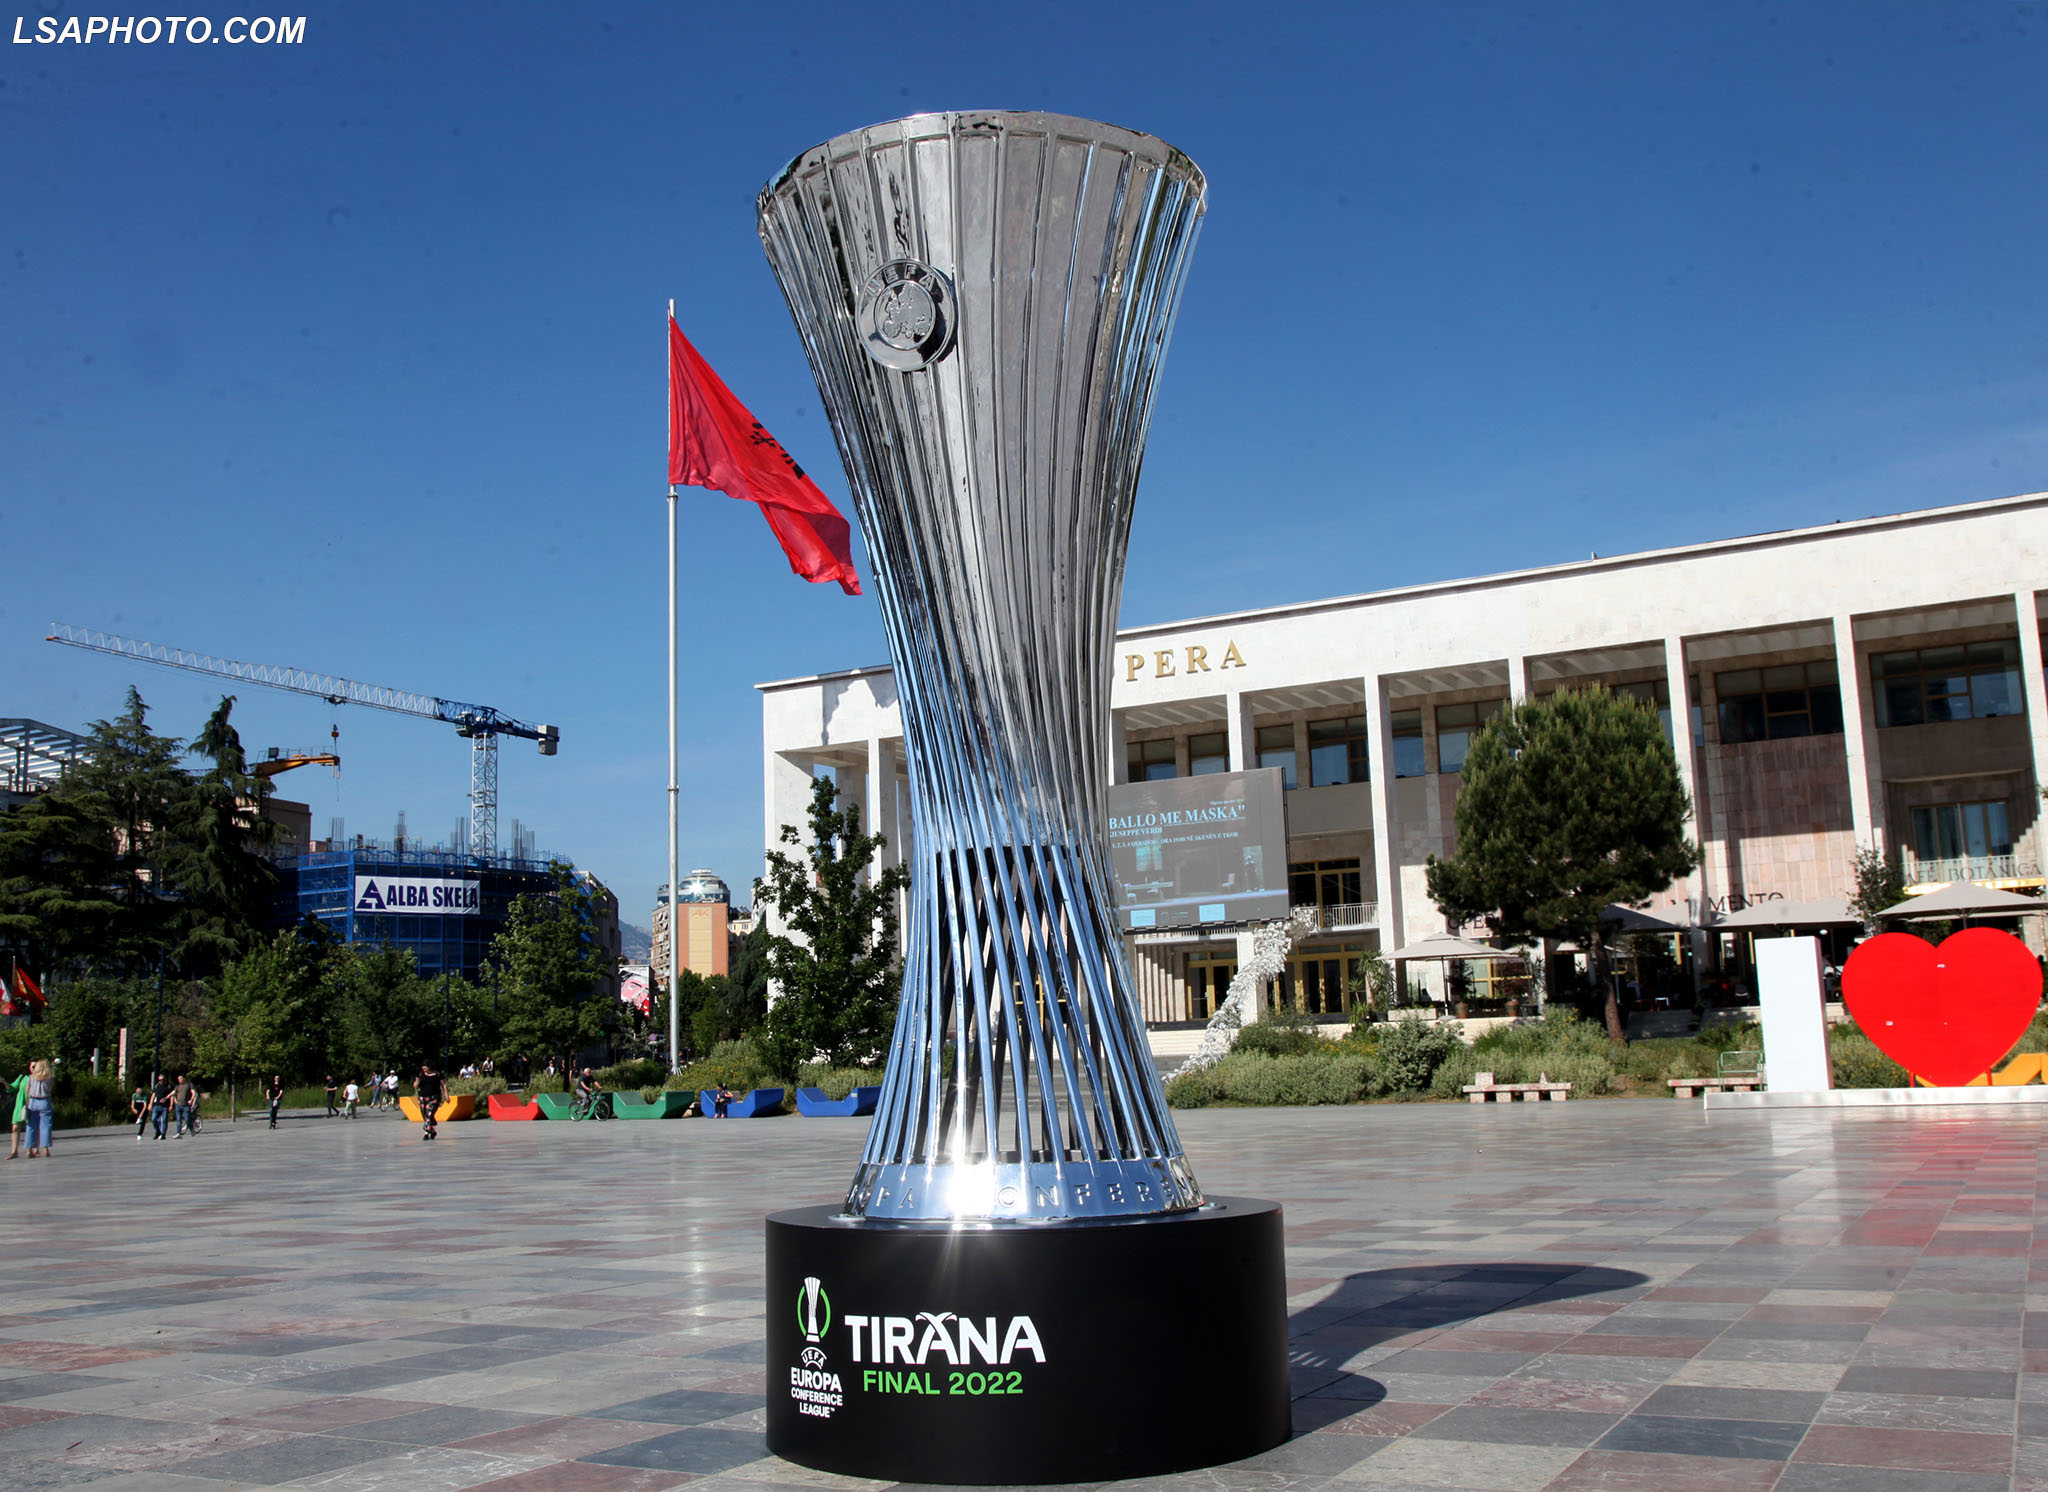 KUPA E FINALES NE SHESH - Ne prag te finales se UEFA Conference League, e cila do te vendose perballe Roma dhe Feynoord, ne sheshin Skenderbej eshte vendosur nje model i Kupes./r/n/r/nFINAL CUP IS PLACED ON THE SQUARE - On the eve of the UEFA Conference League final, which will see Roma and Feynoord face each othee, a Cup model was placed on the Skenderbej Square.